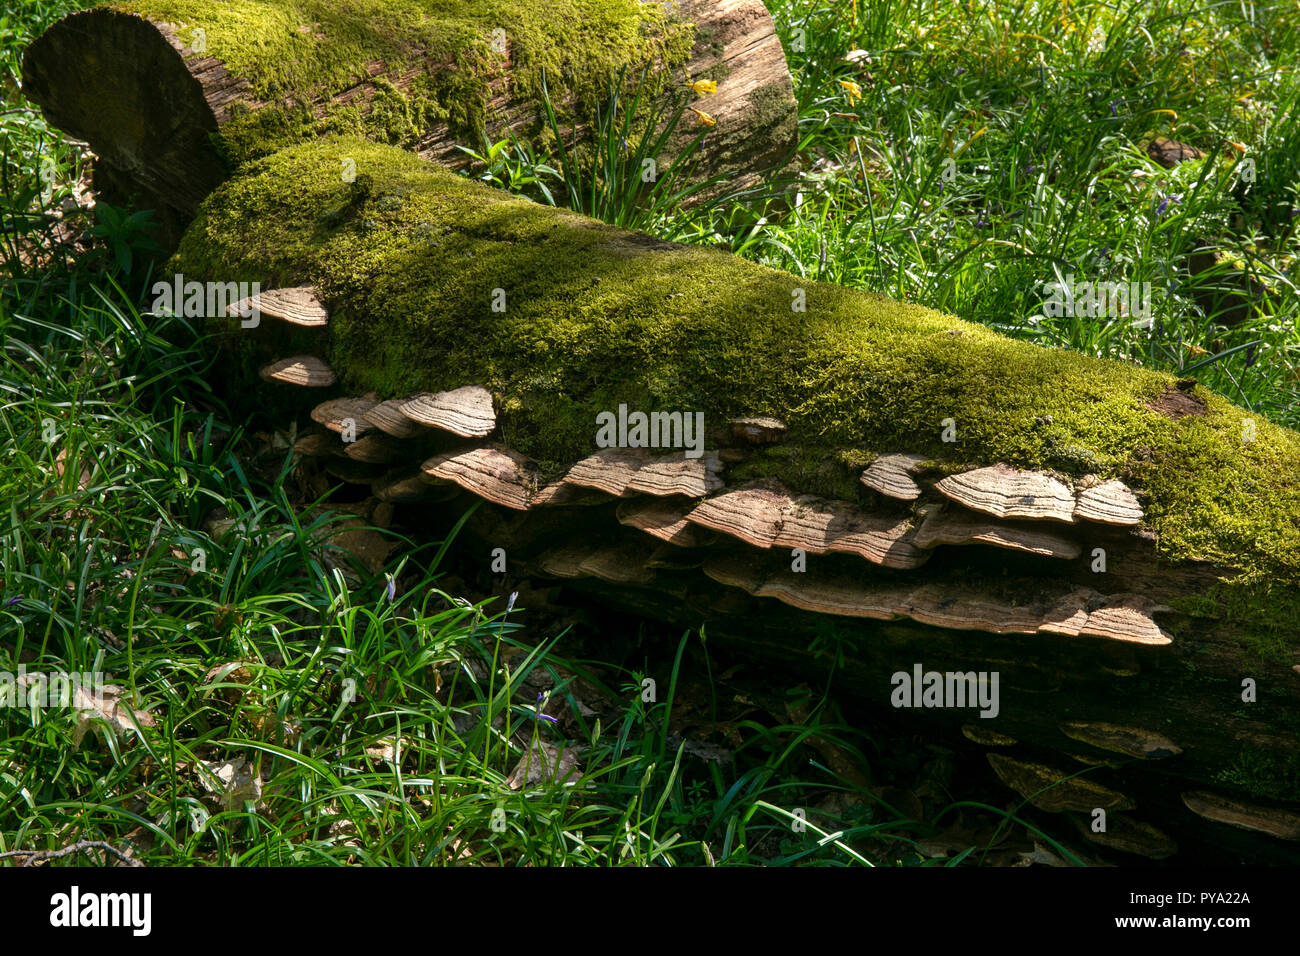 Bracket Fungus growing on fallen beech tree in woodland,England,Europe Stock Photo